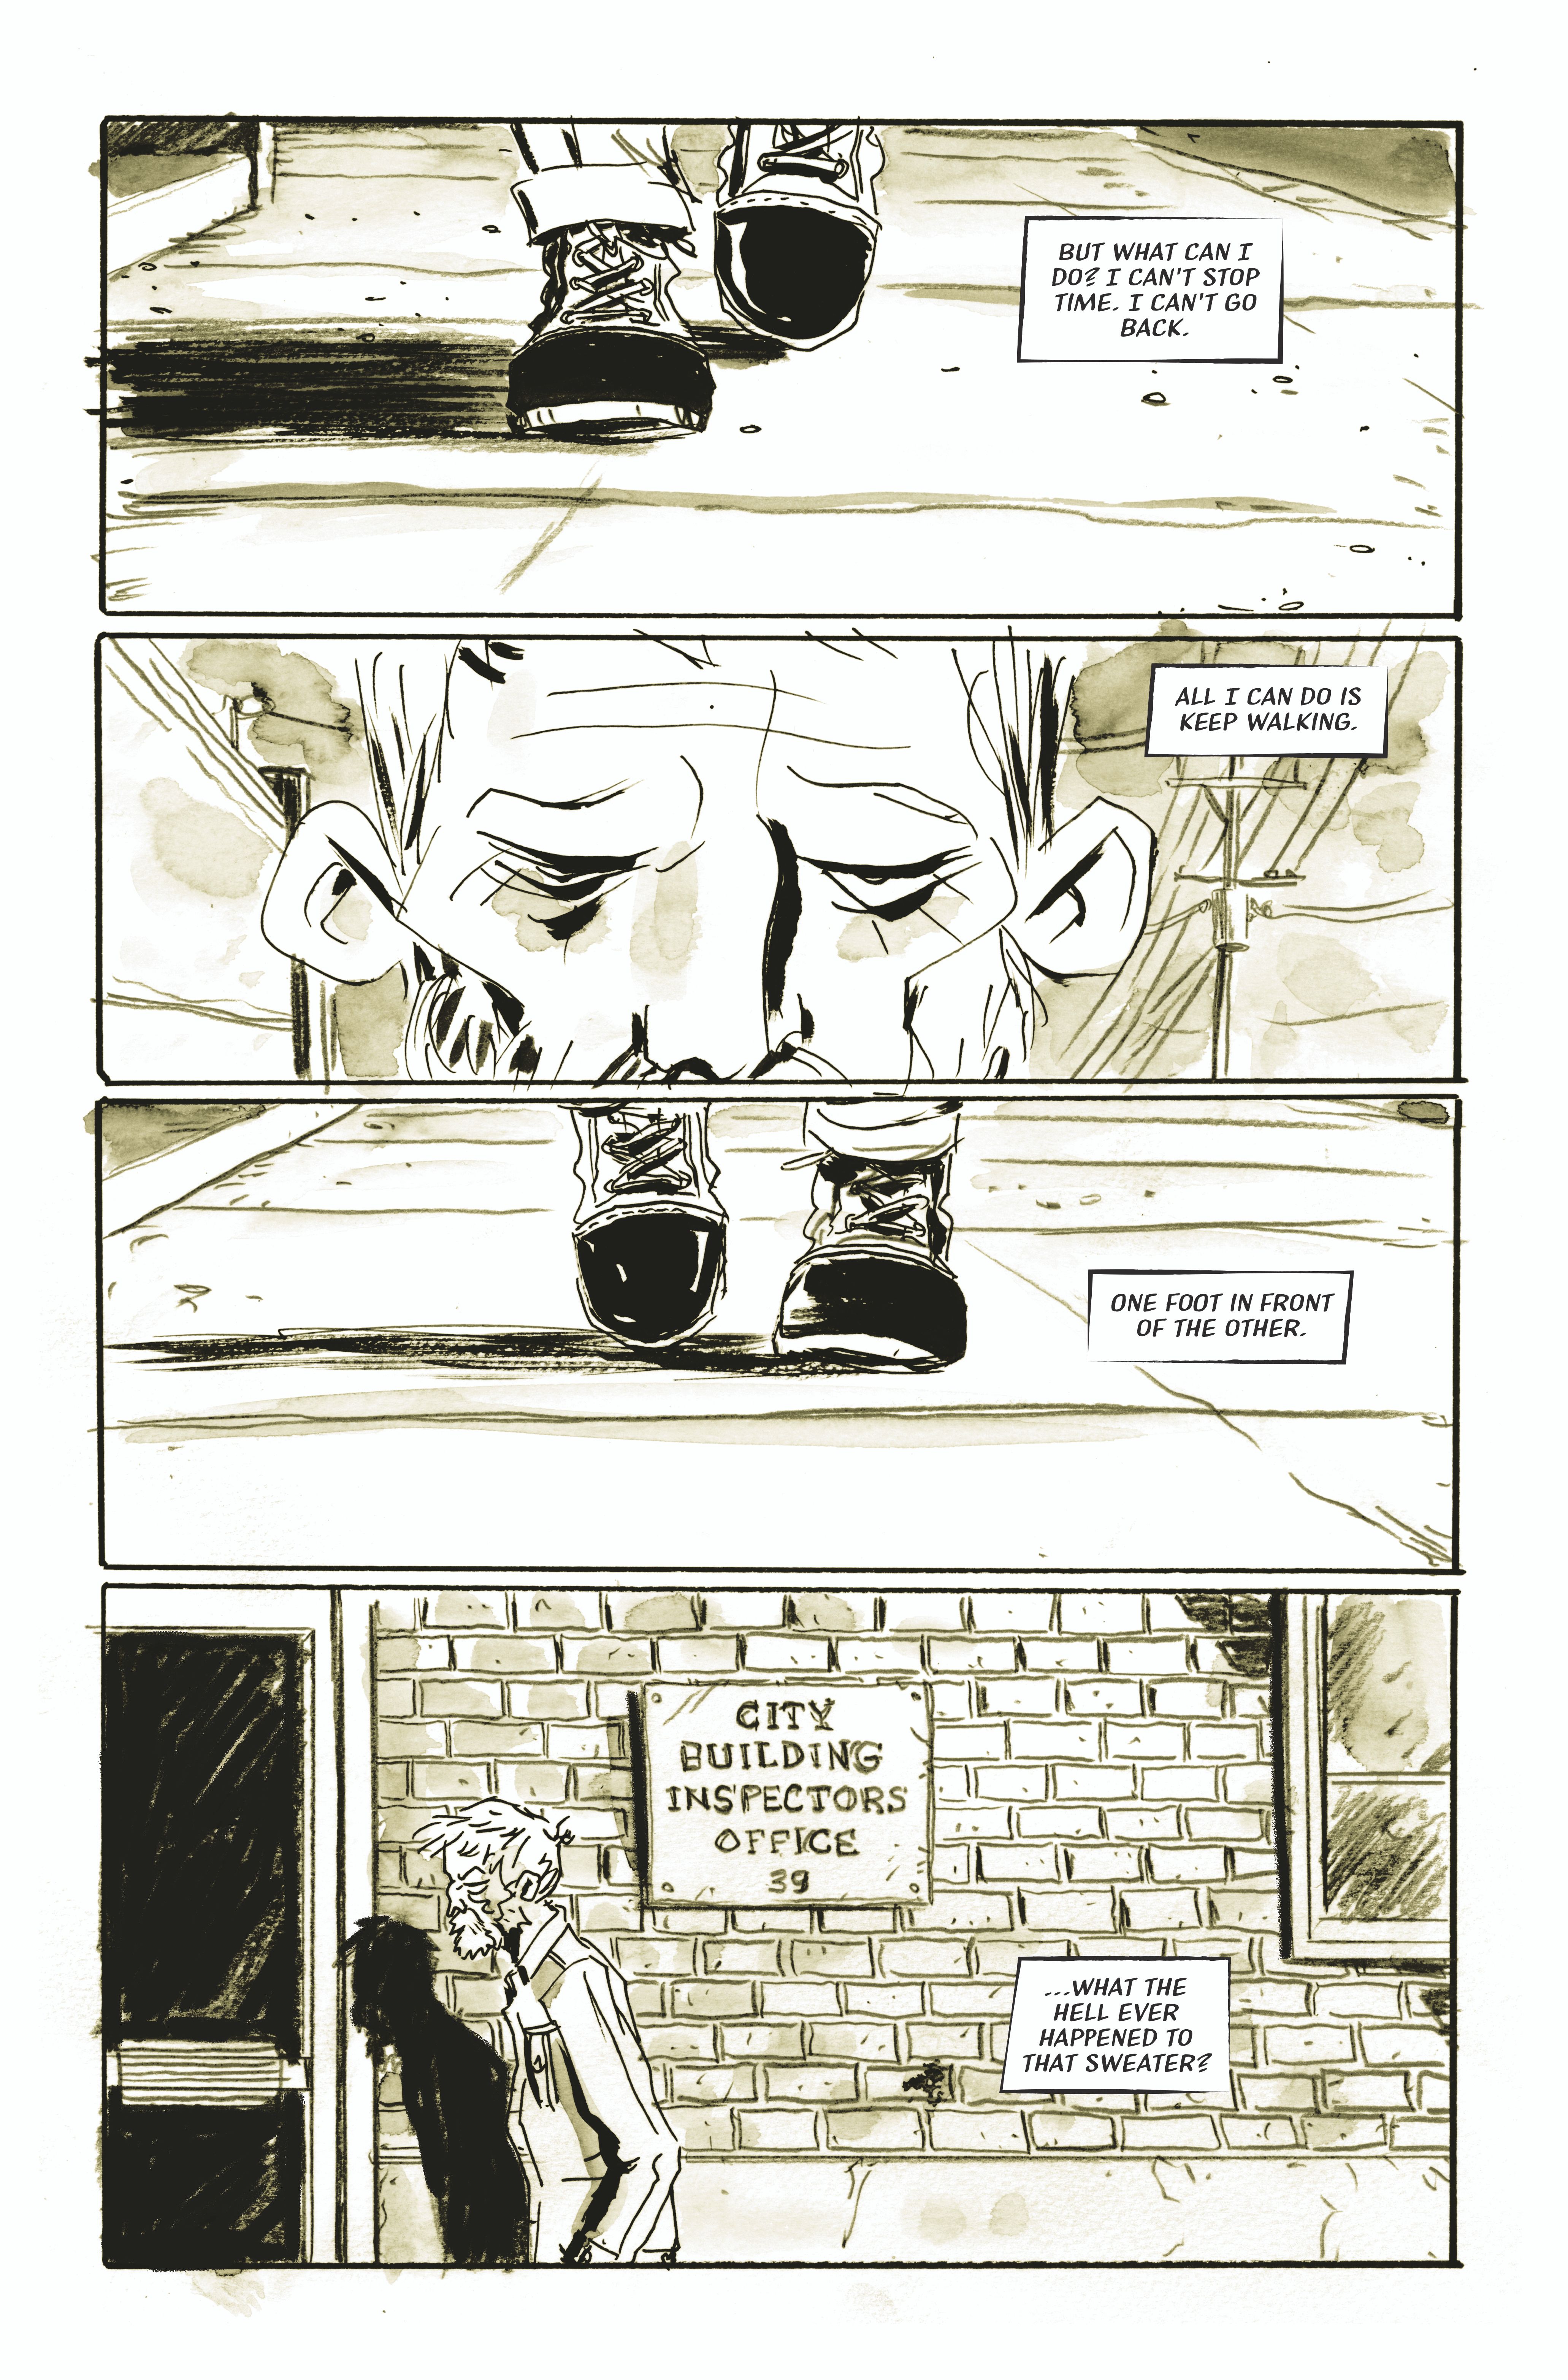 Preview of Jeff Lemire's Mazebook from Dark Horse Comics